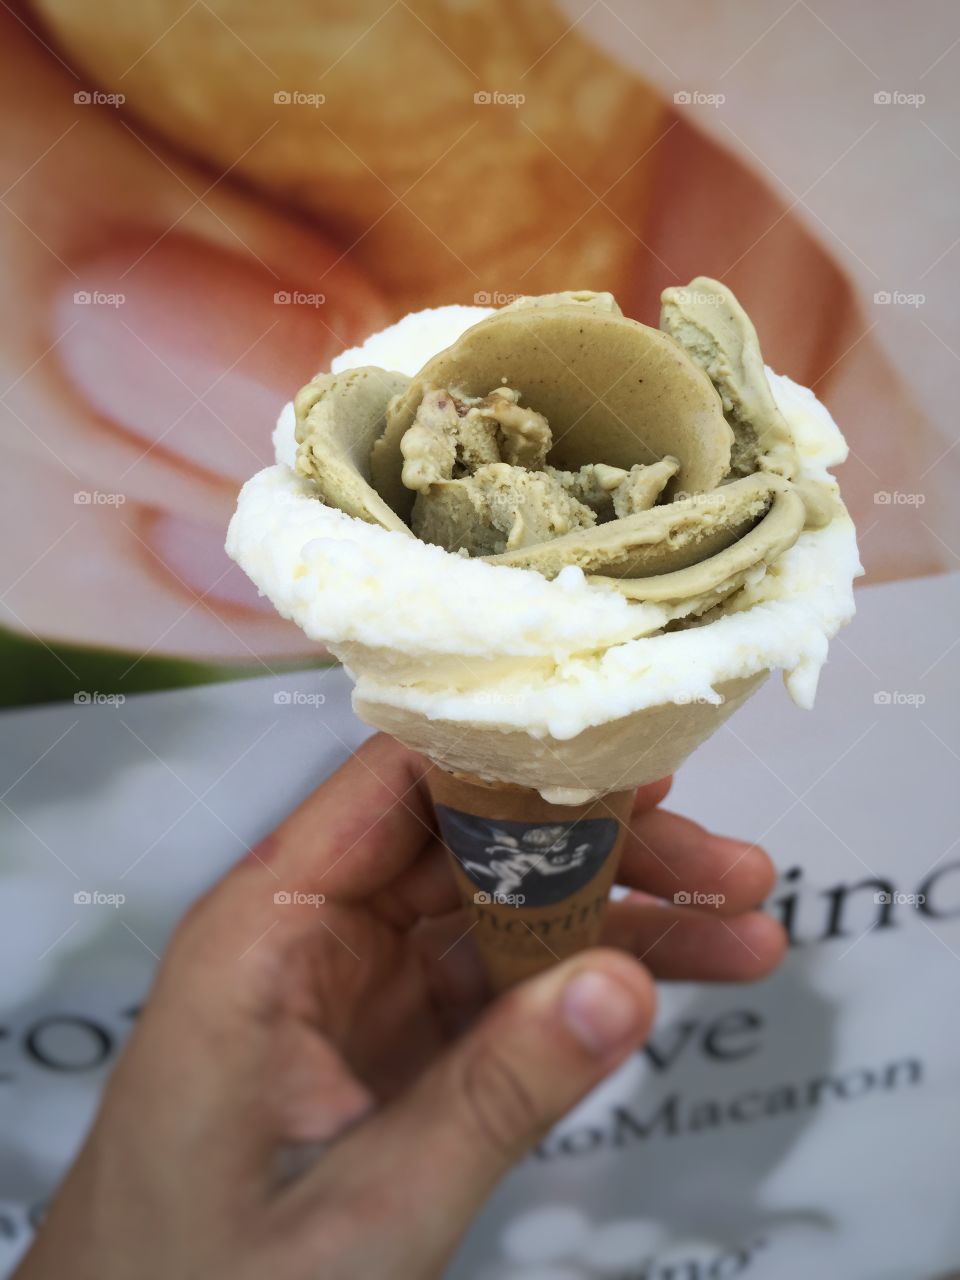 Ice cream with a Rose shape, Valencia, Spain.